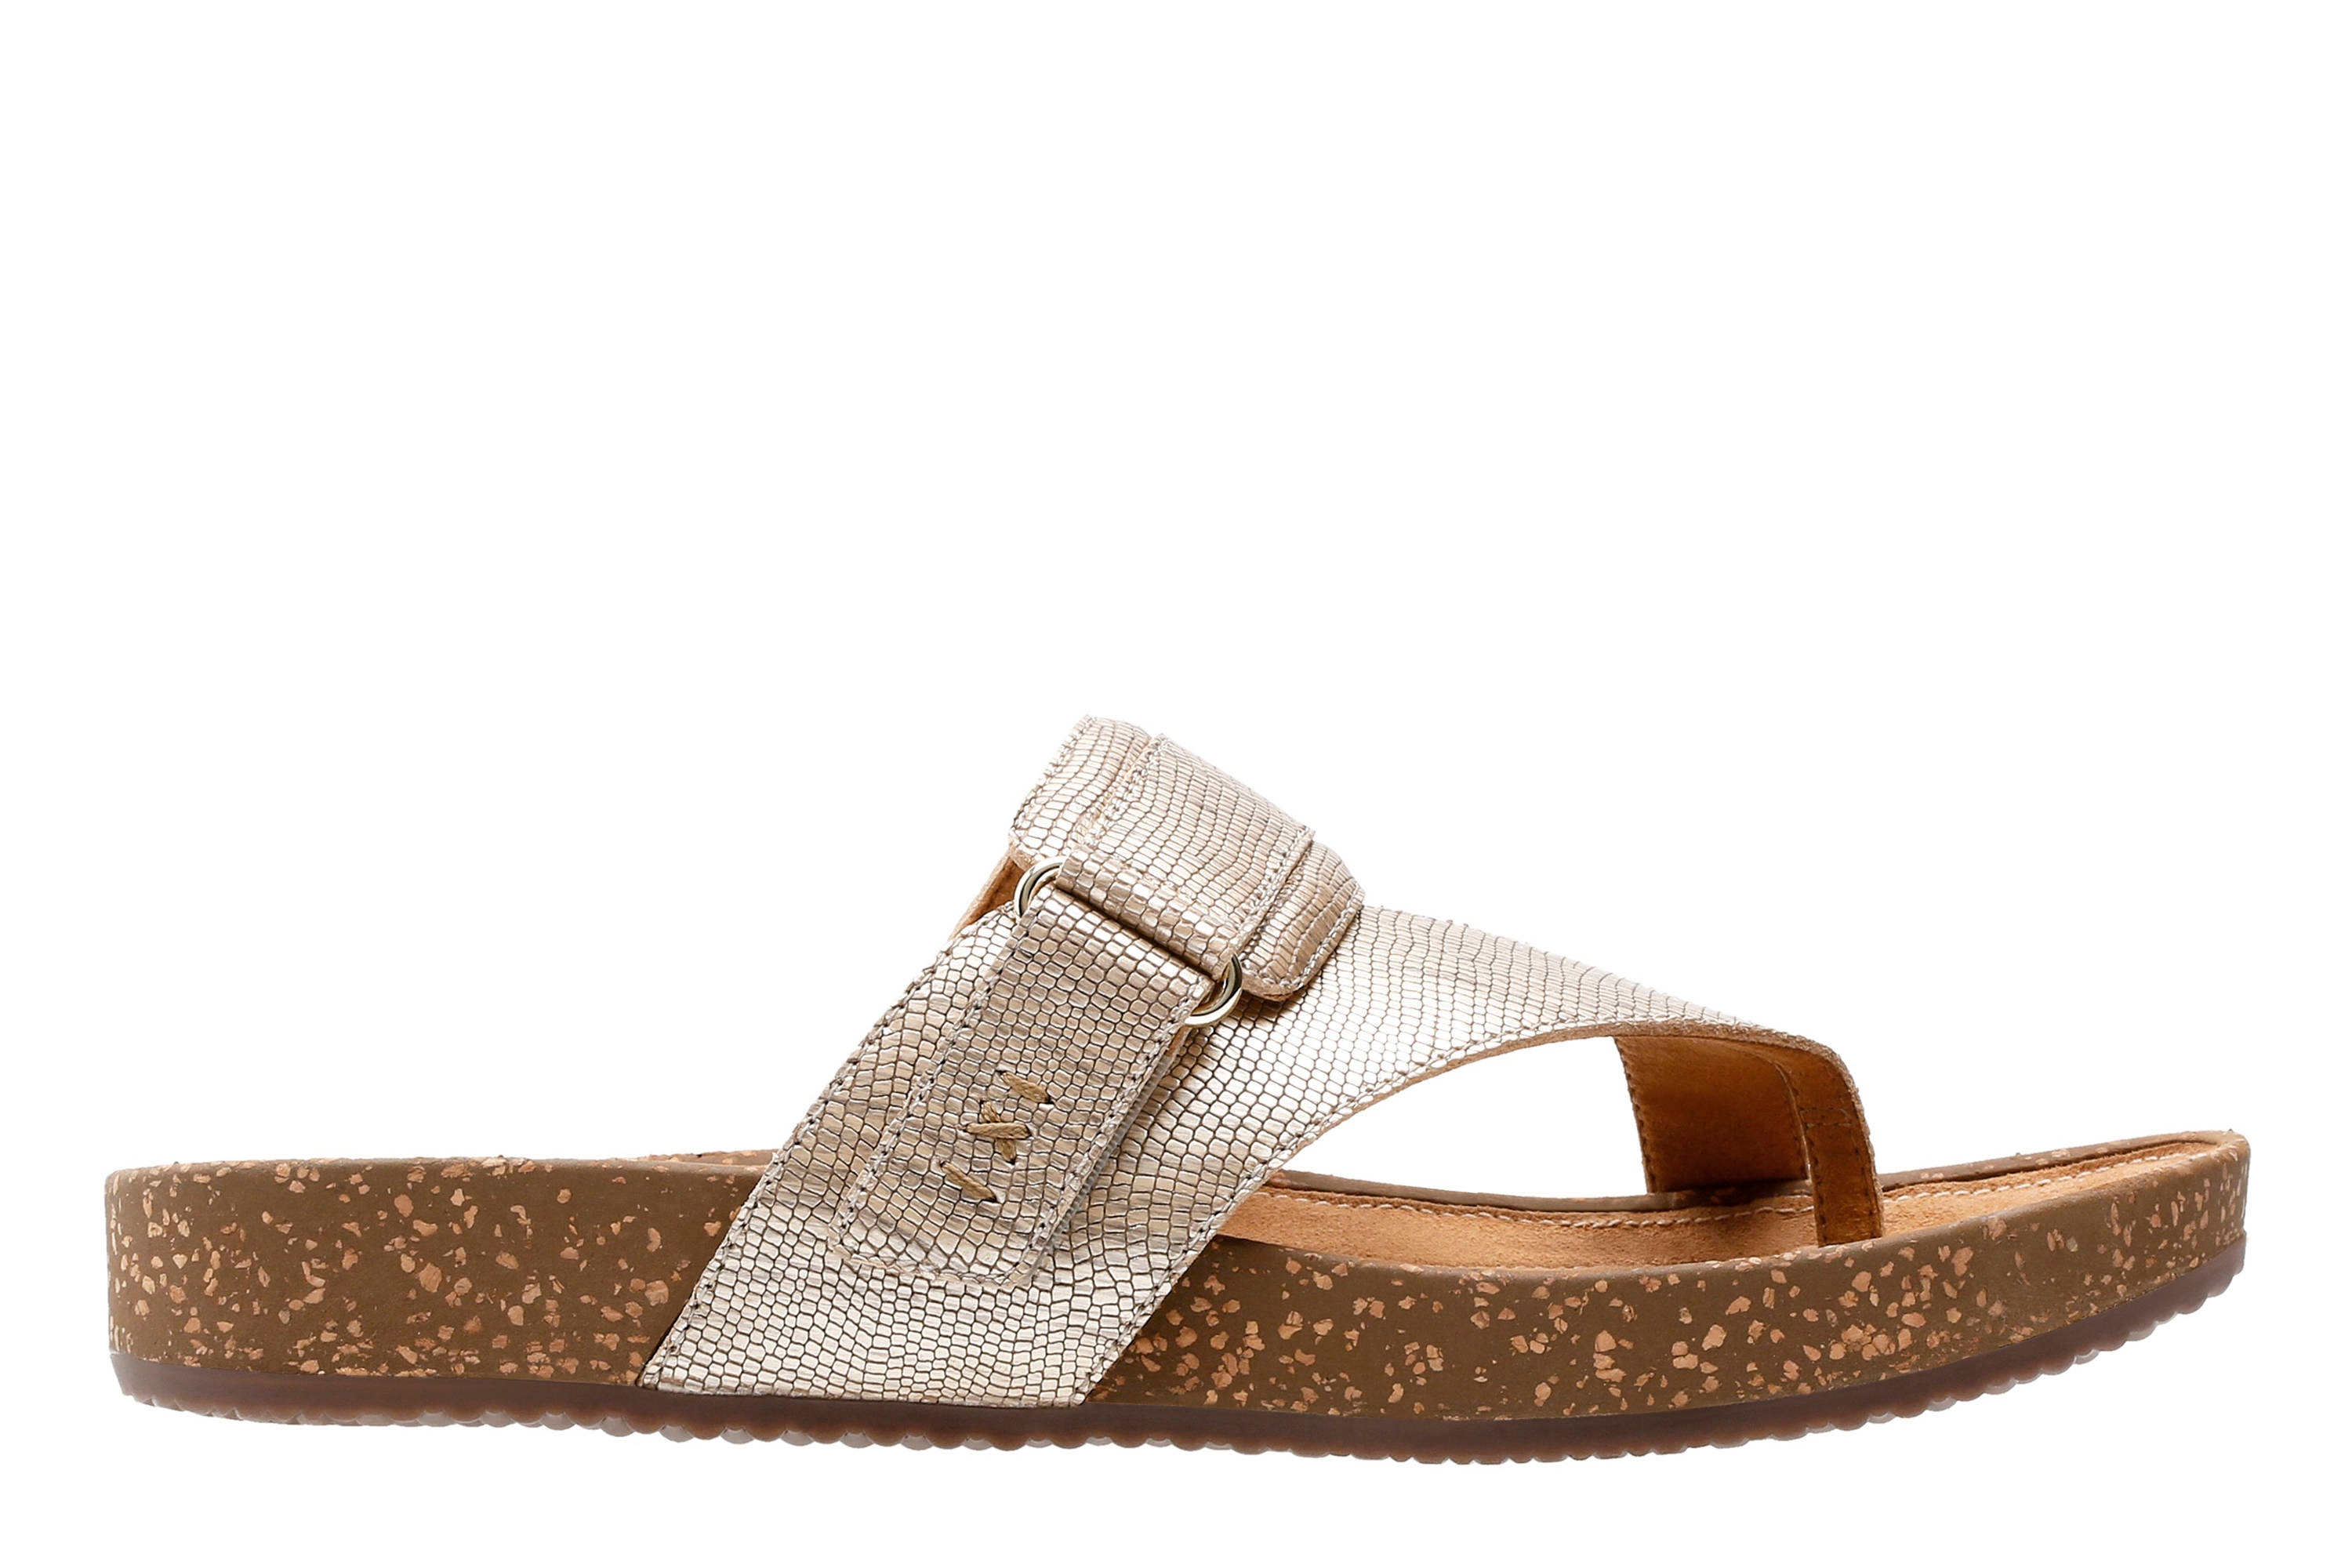 Clarks | Rosilla Durham Gold Metallic Flat Sandals